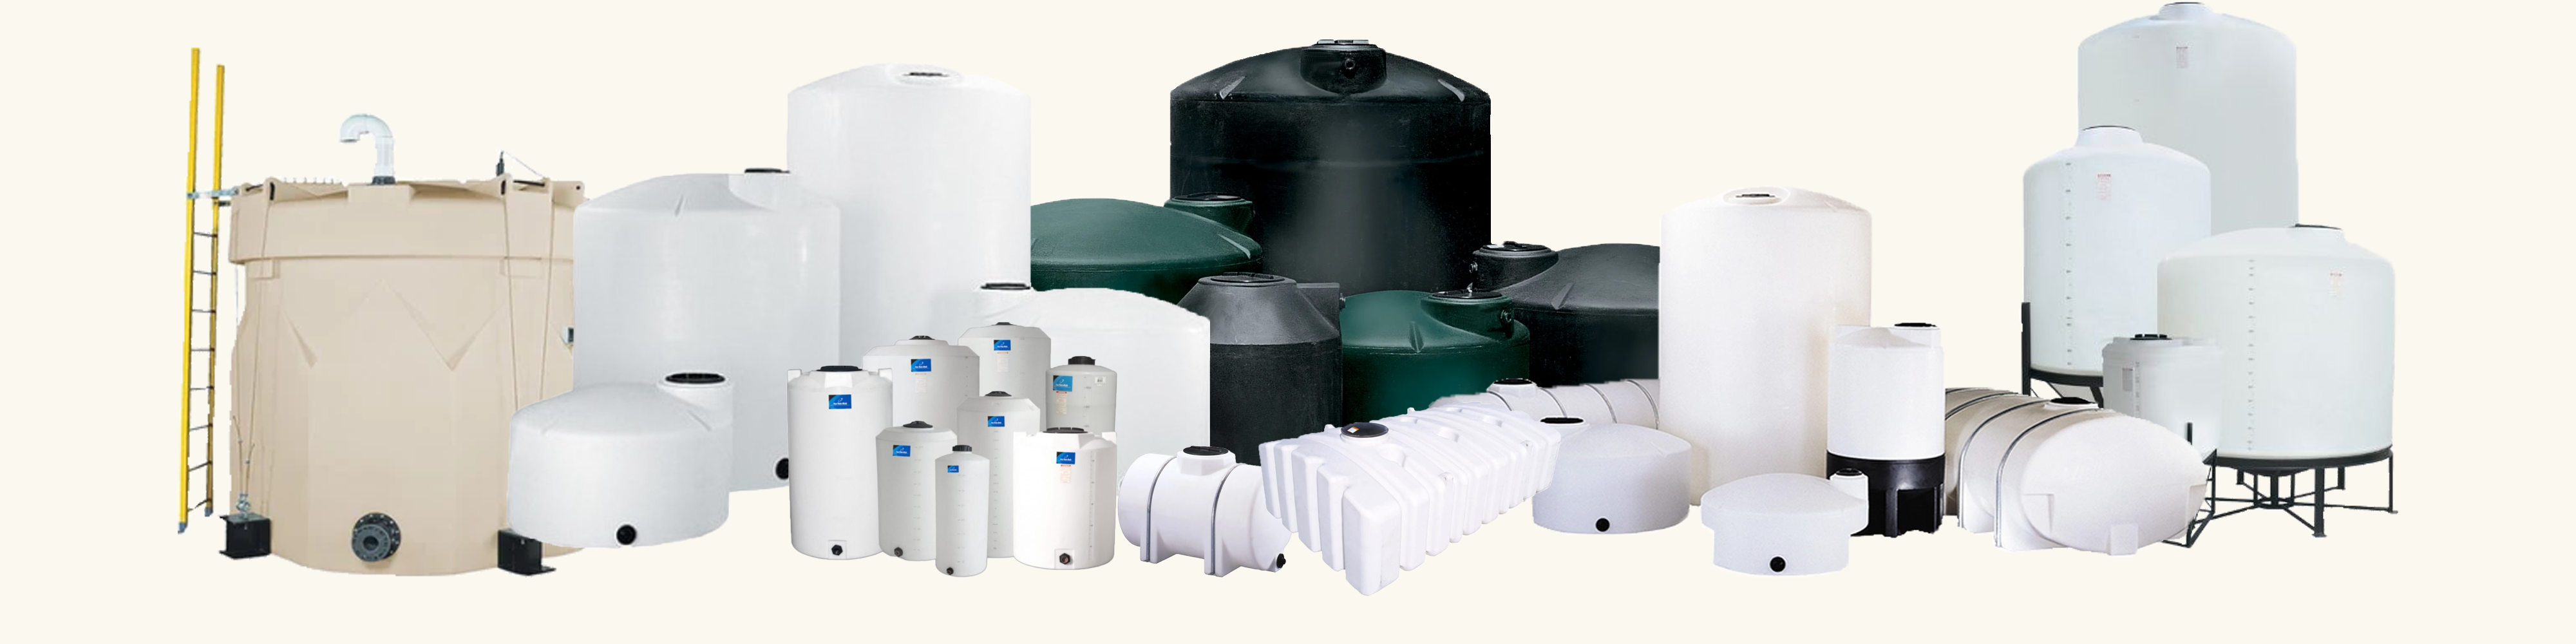 Plastic Tanks & Liquid Handling Systems – BARR Plastics